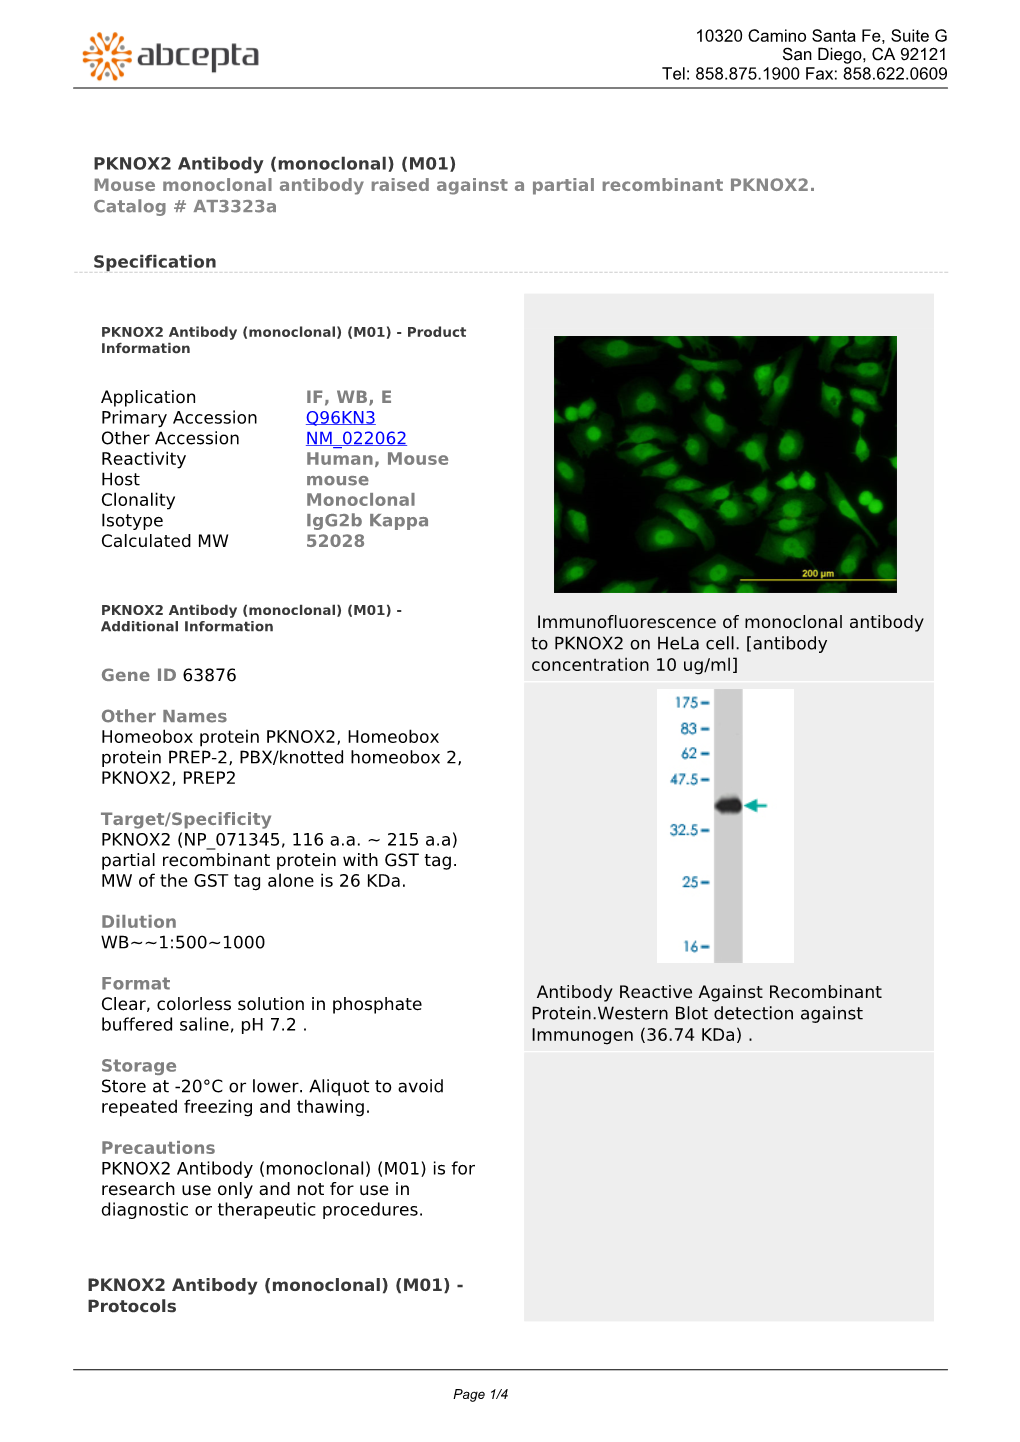 PKNOX2 Antibody (Monoclonal) (M01) Mouse Monoclonal Antibody Raised Against a Partial Recombinant PKNOX2